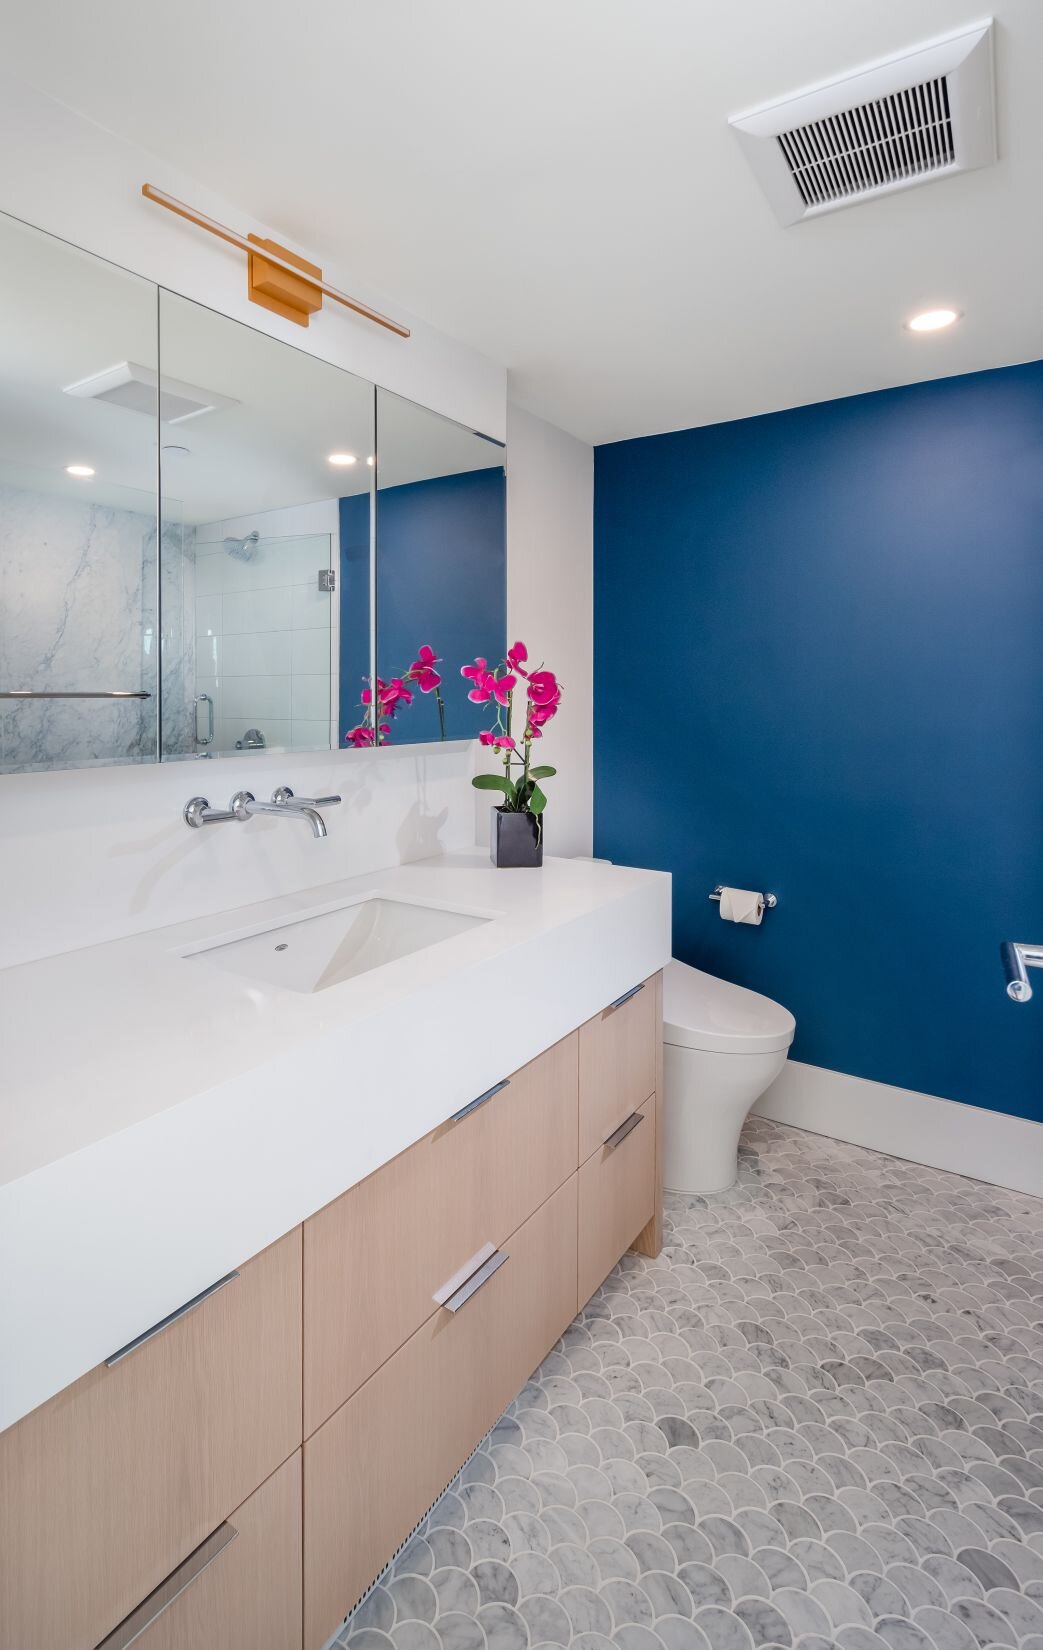 Bathroom, Countertops, Blue wall